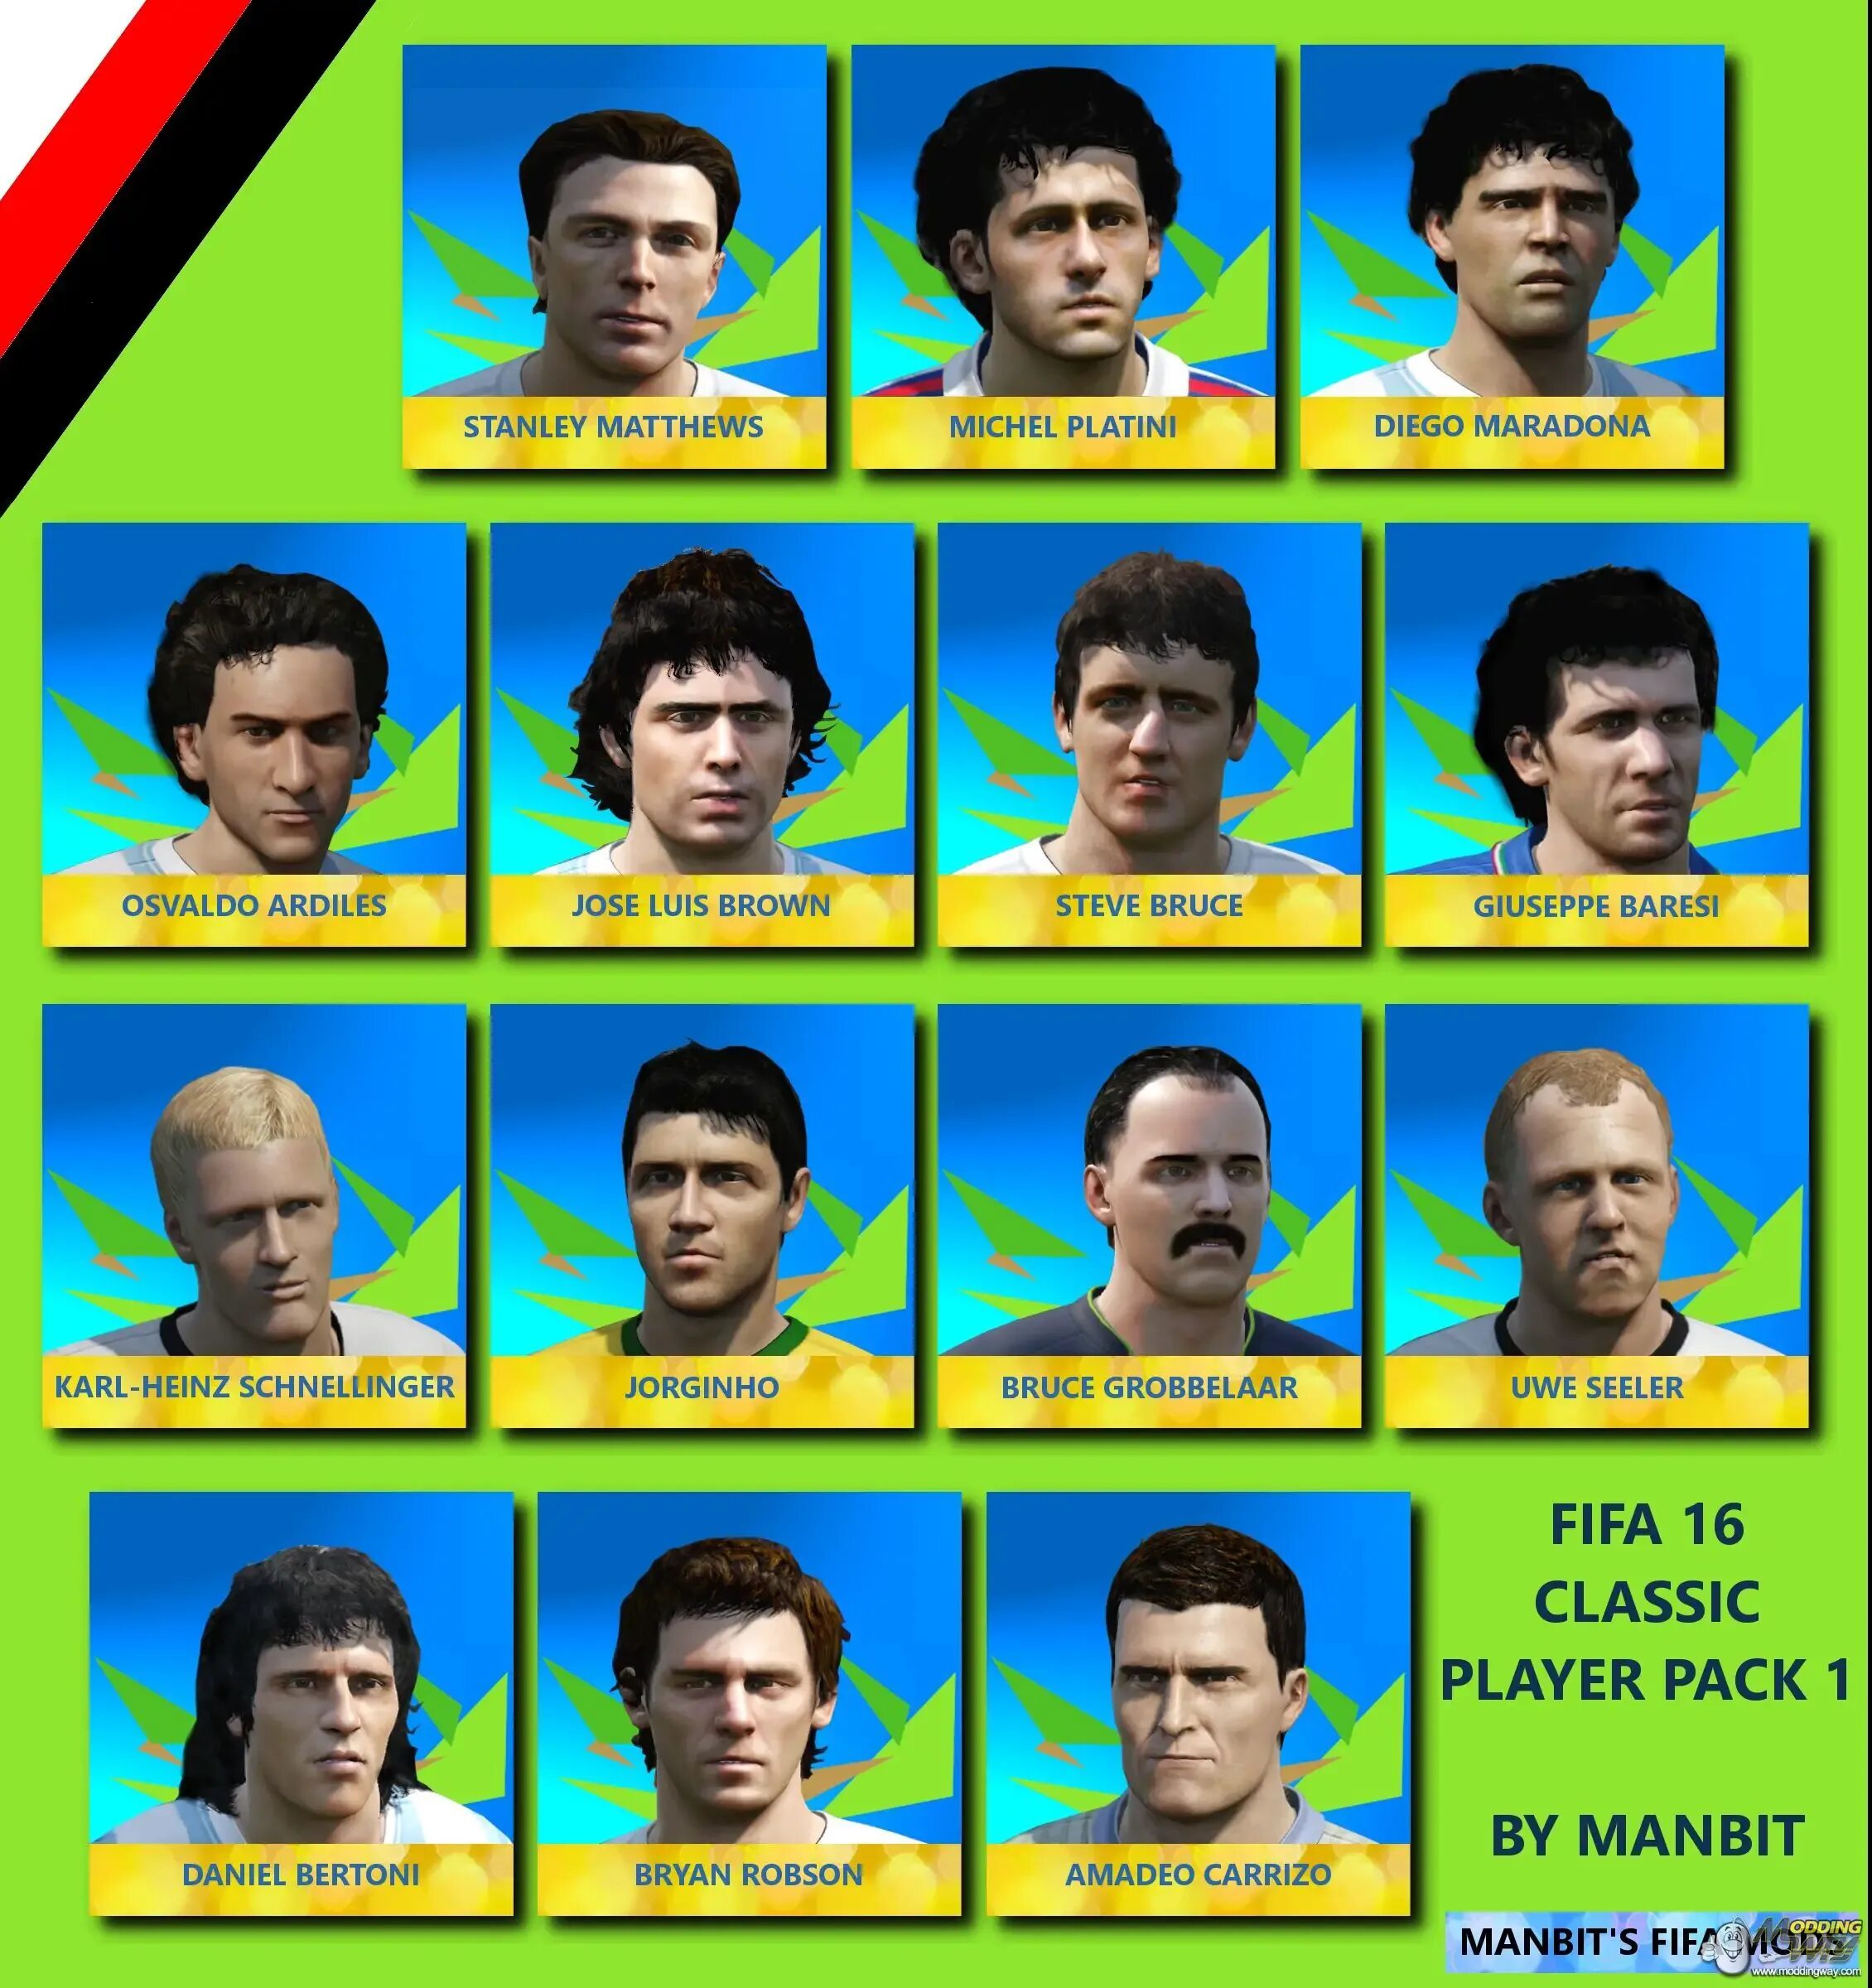 Марадона ФИФА 15. FIFA 16. ФИФА 12 классические игроки. Легендарные игроки в ФИФА 15.